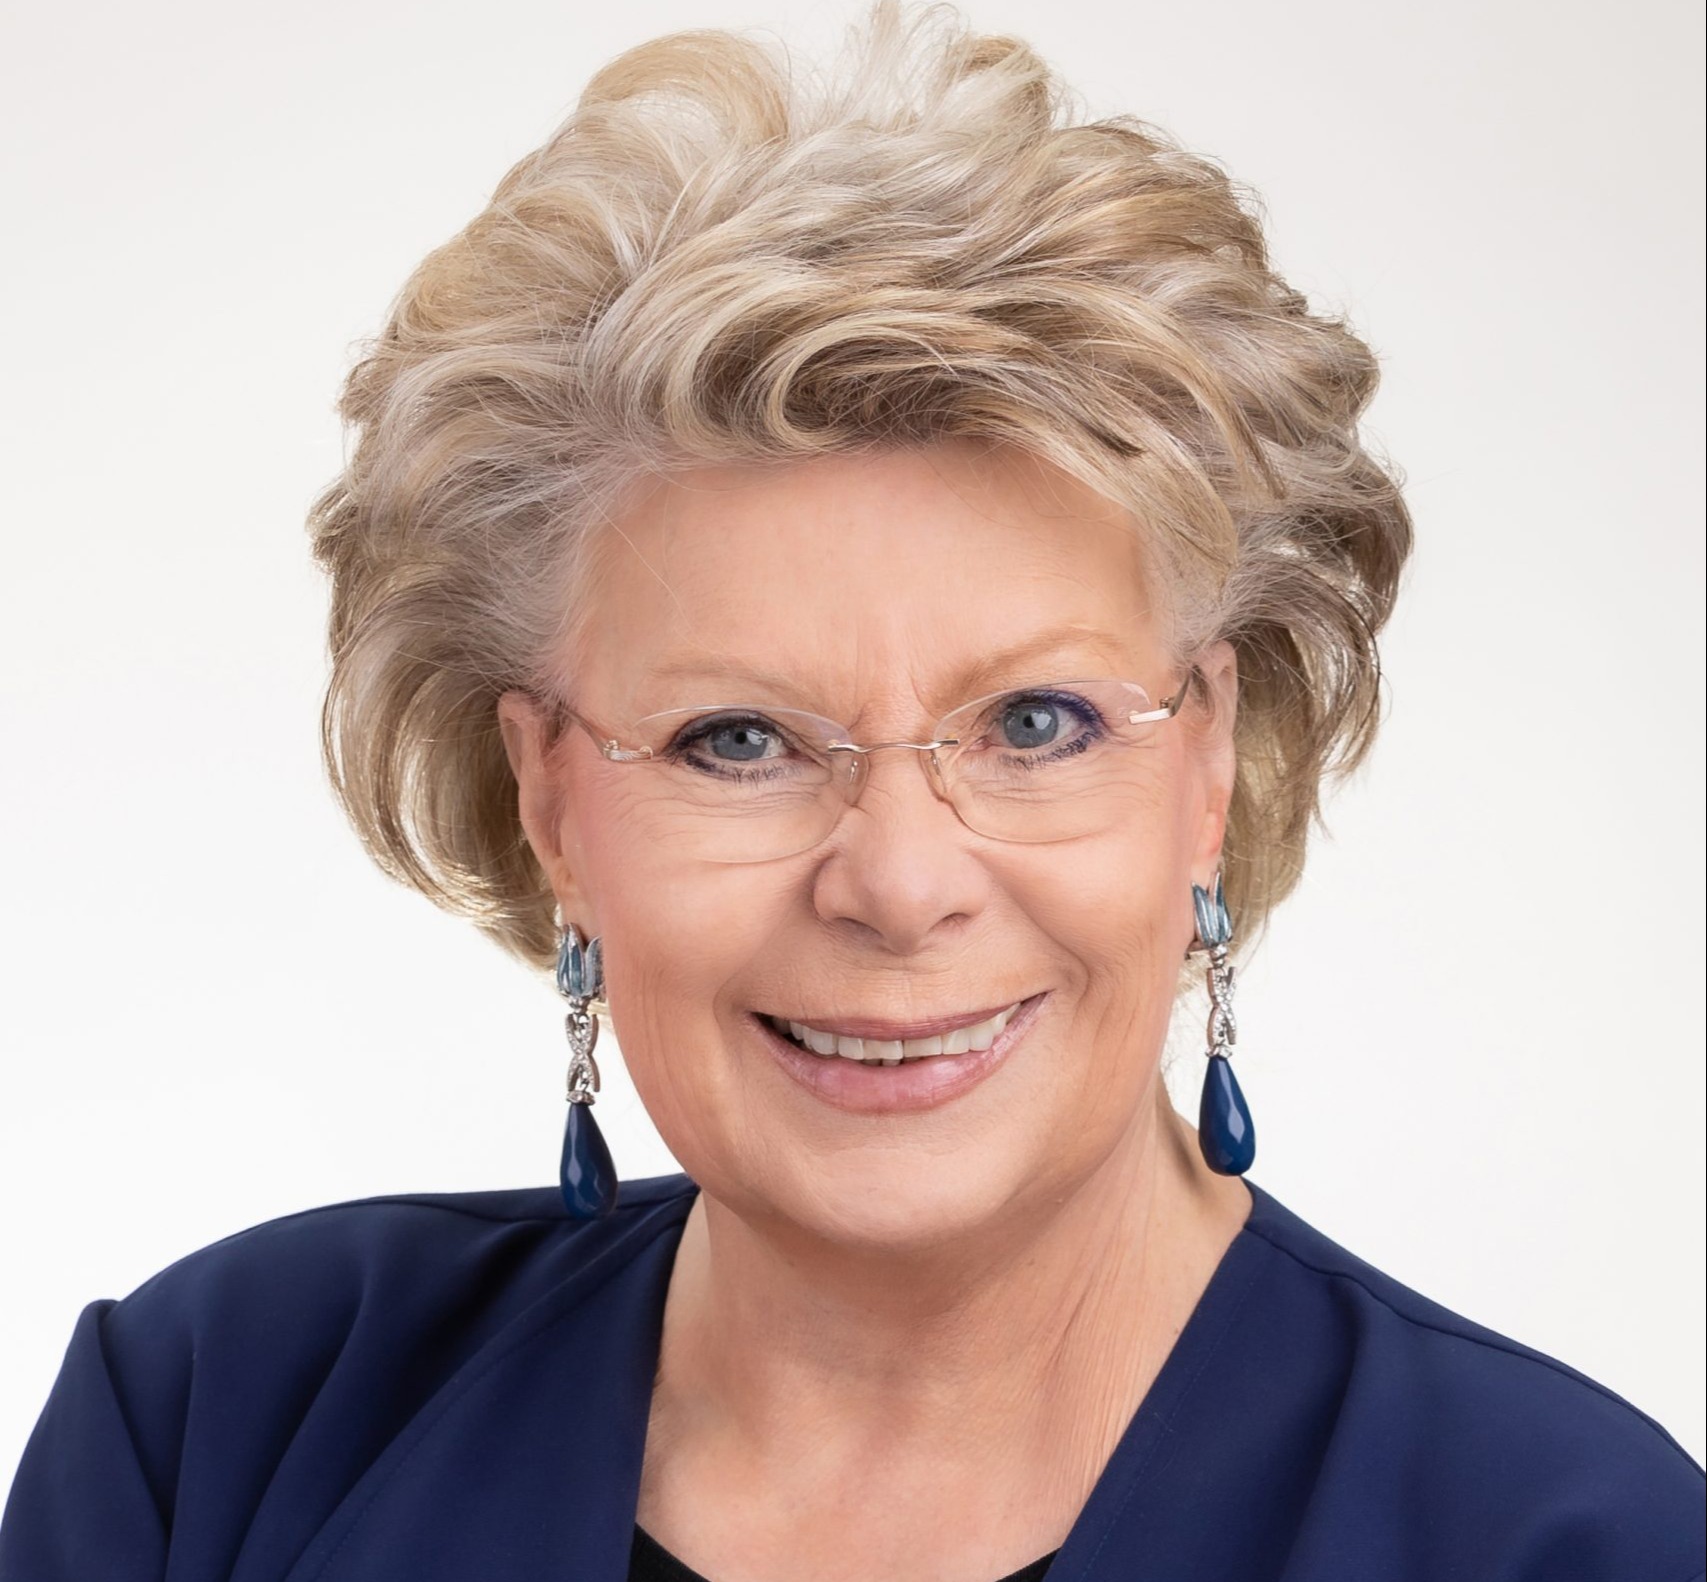 The Hon. Viviane Reding